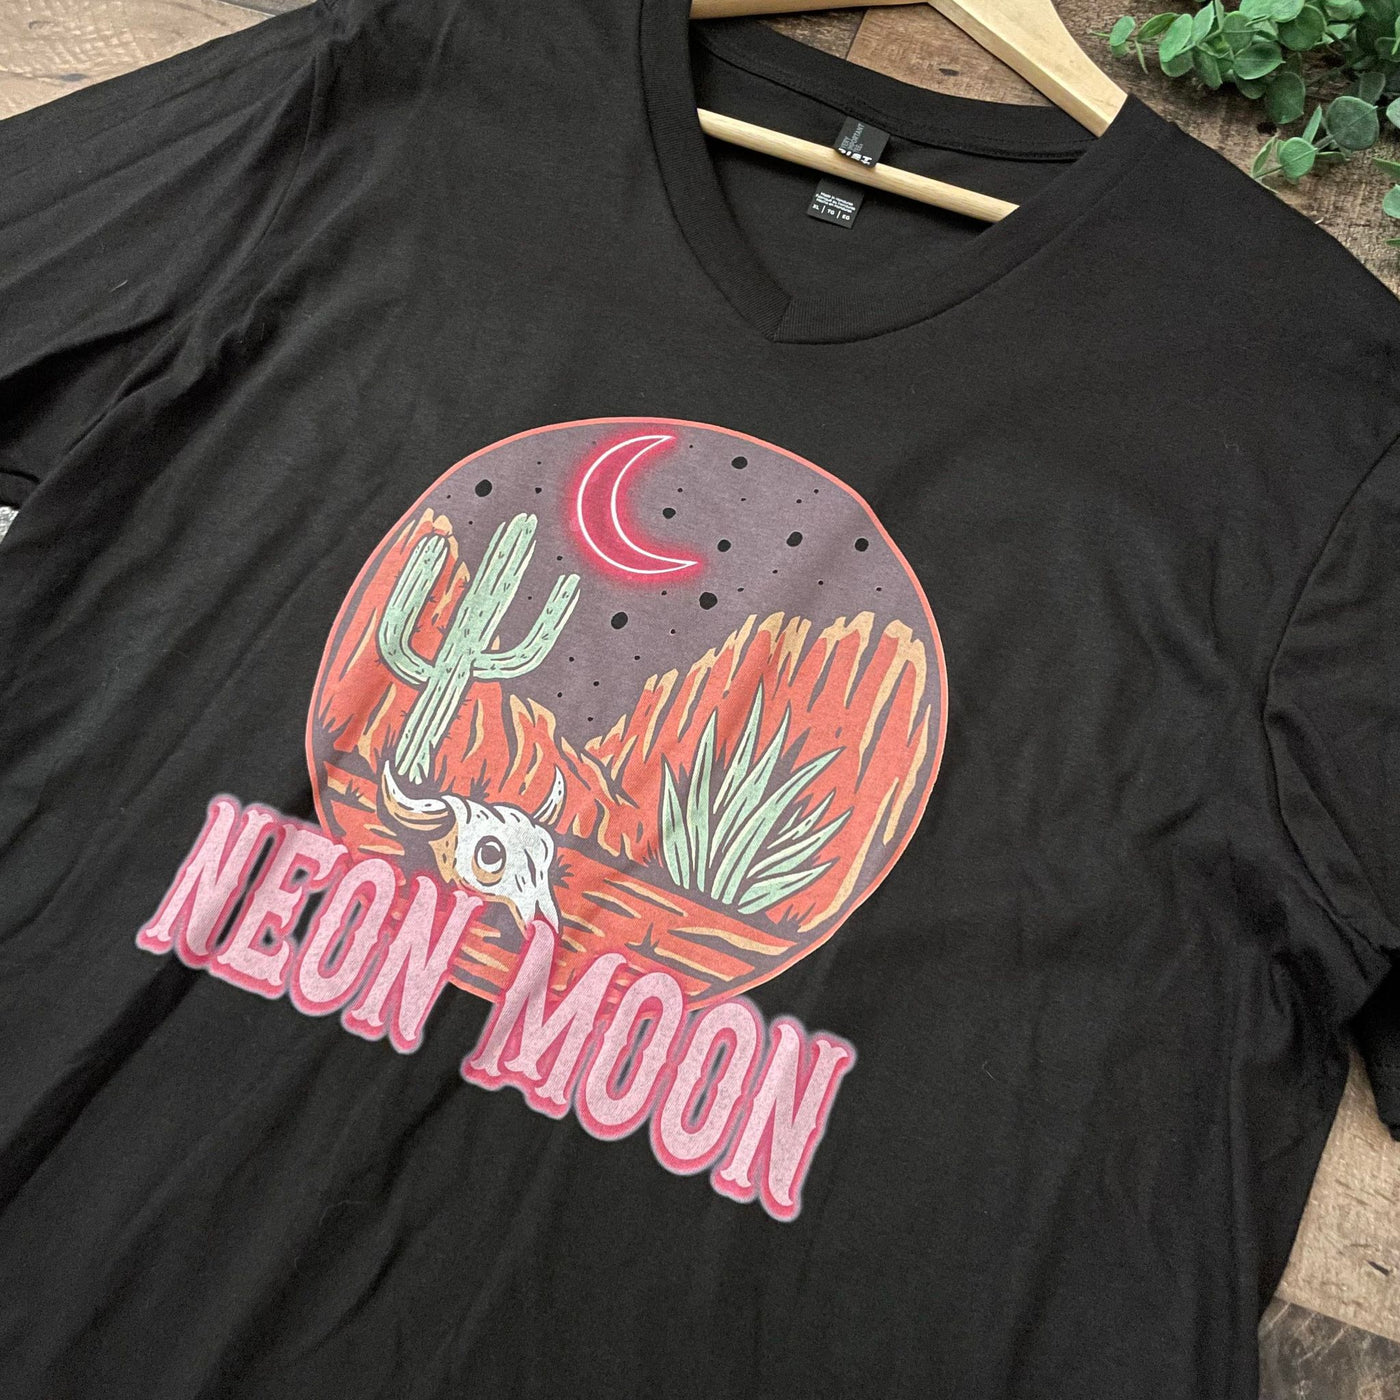 Neon Moon Graphic Tee Shirt